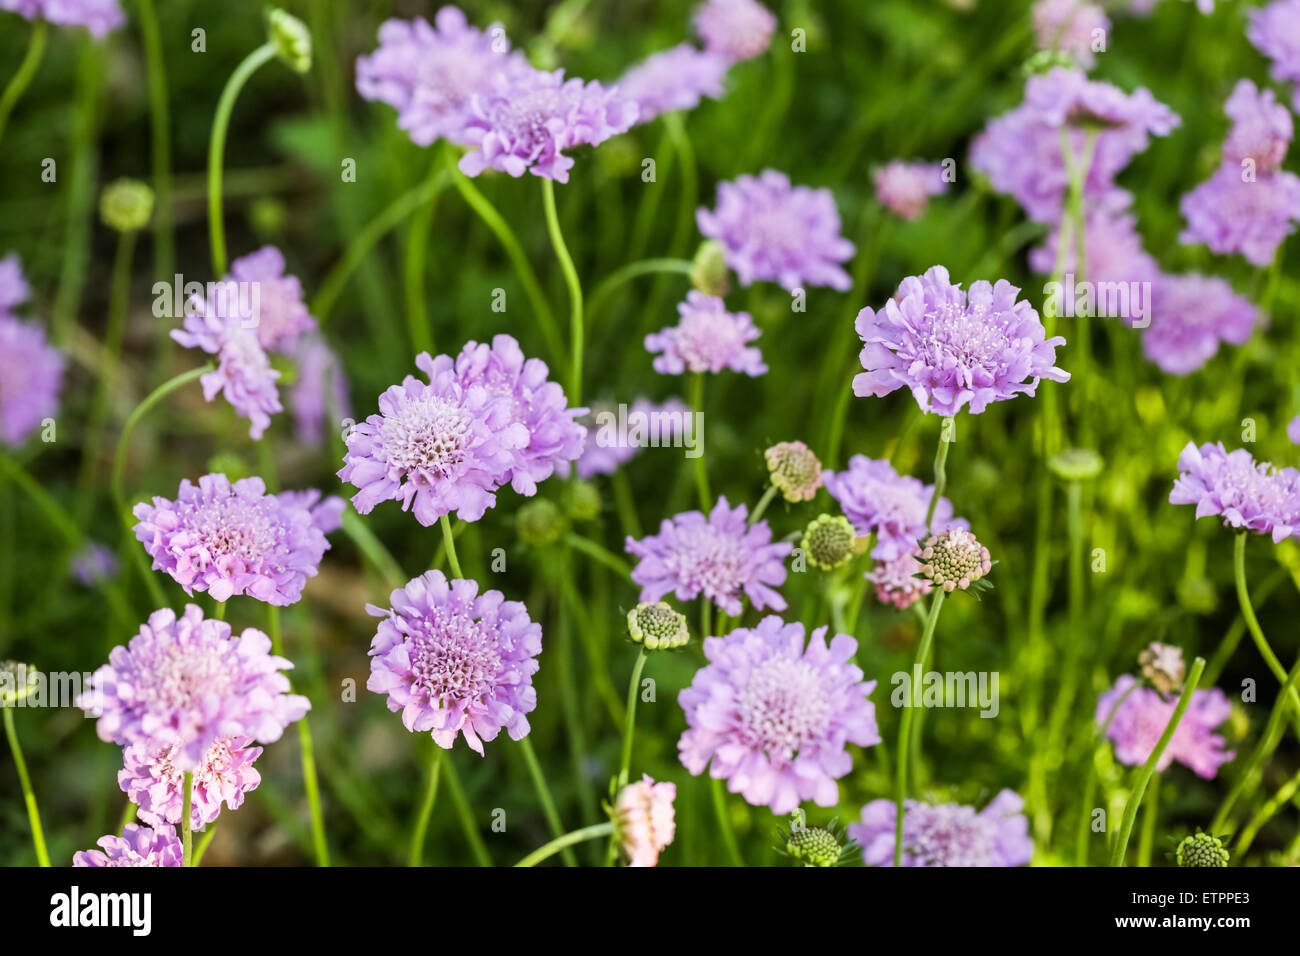 Blooming purple flowers in the summer garden. Stock Photo